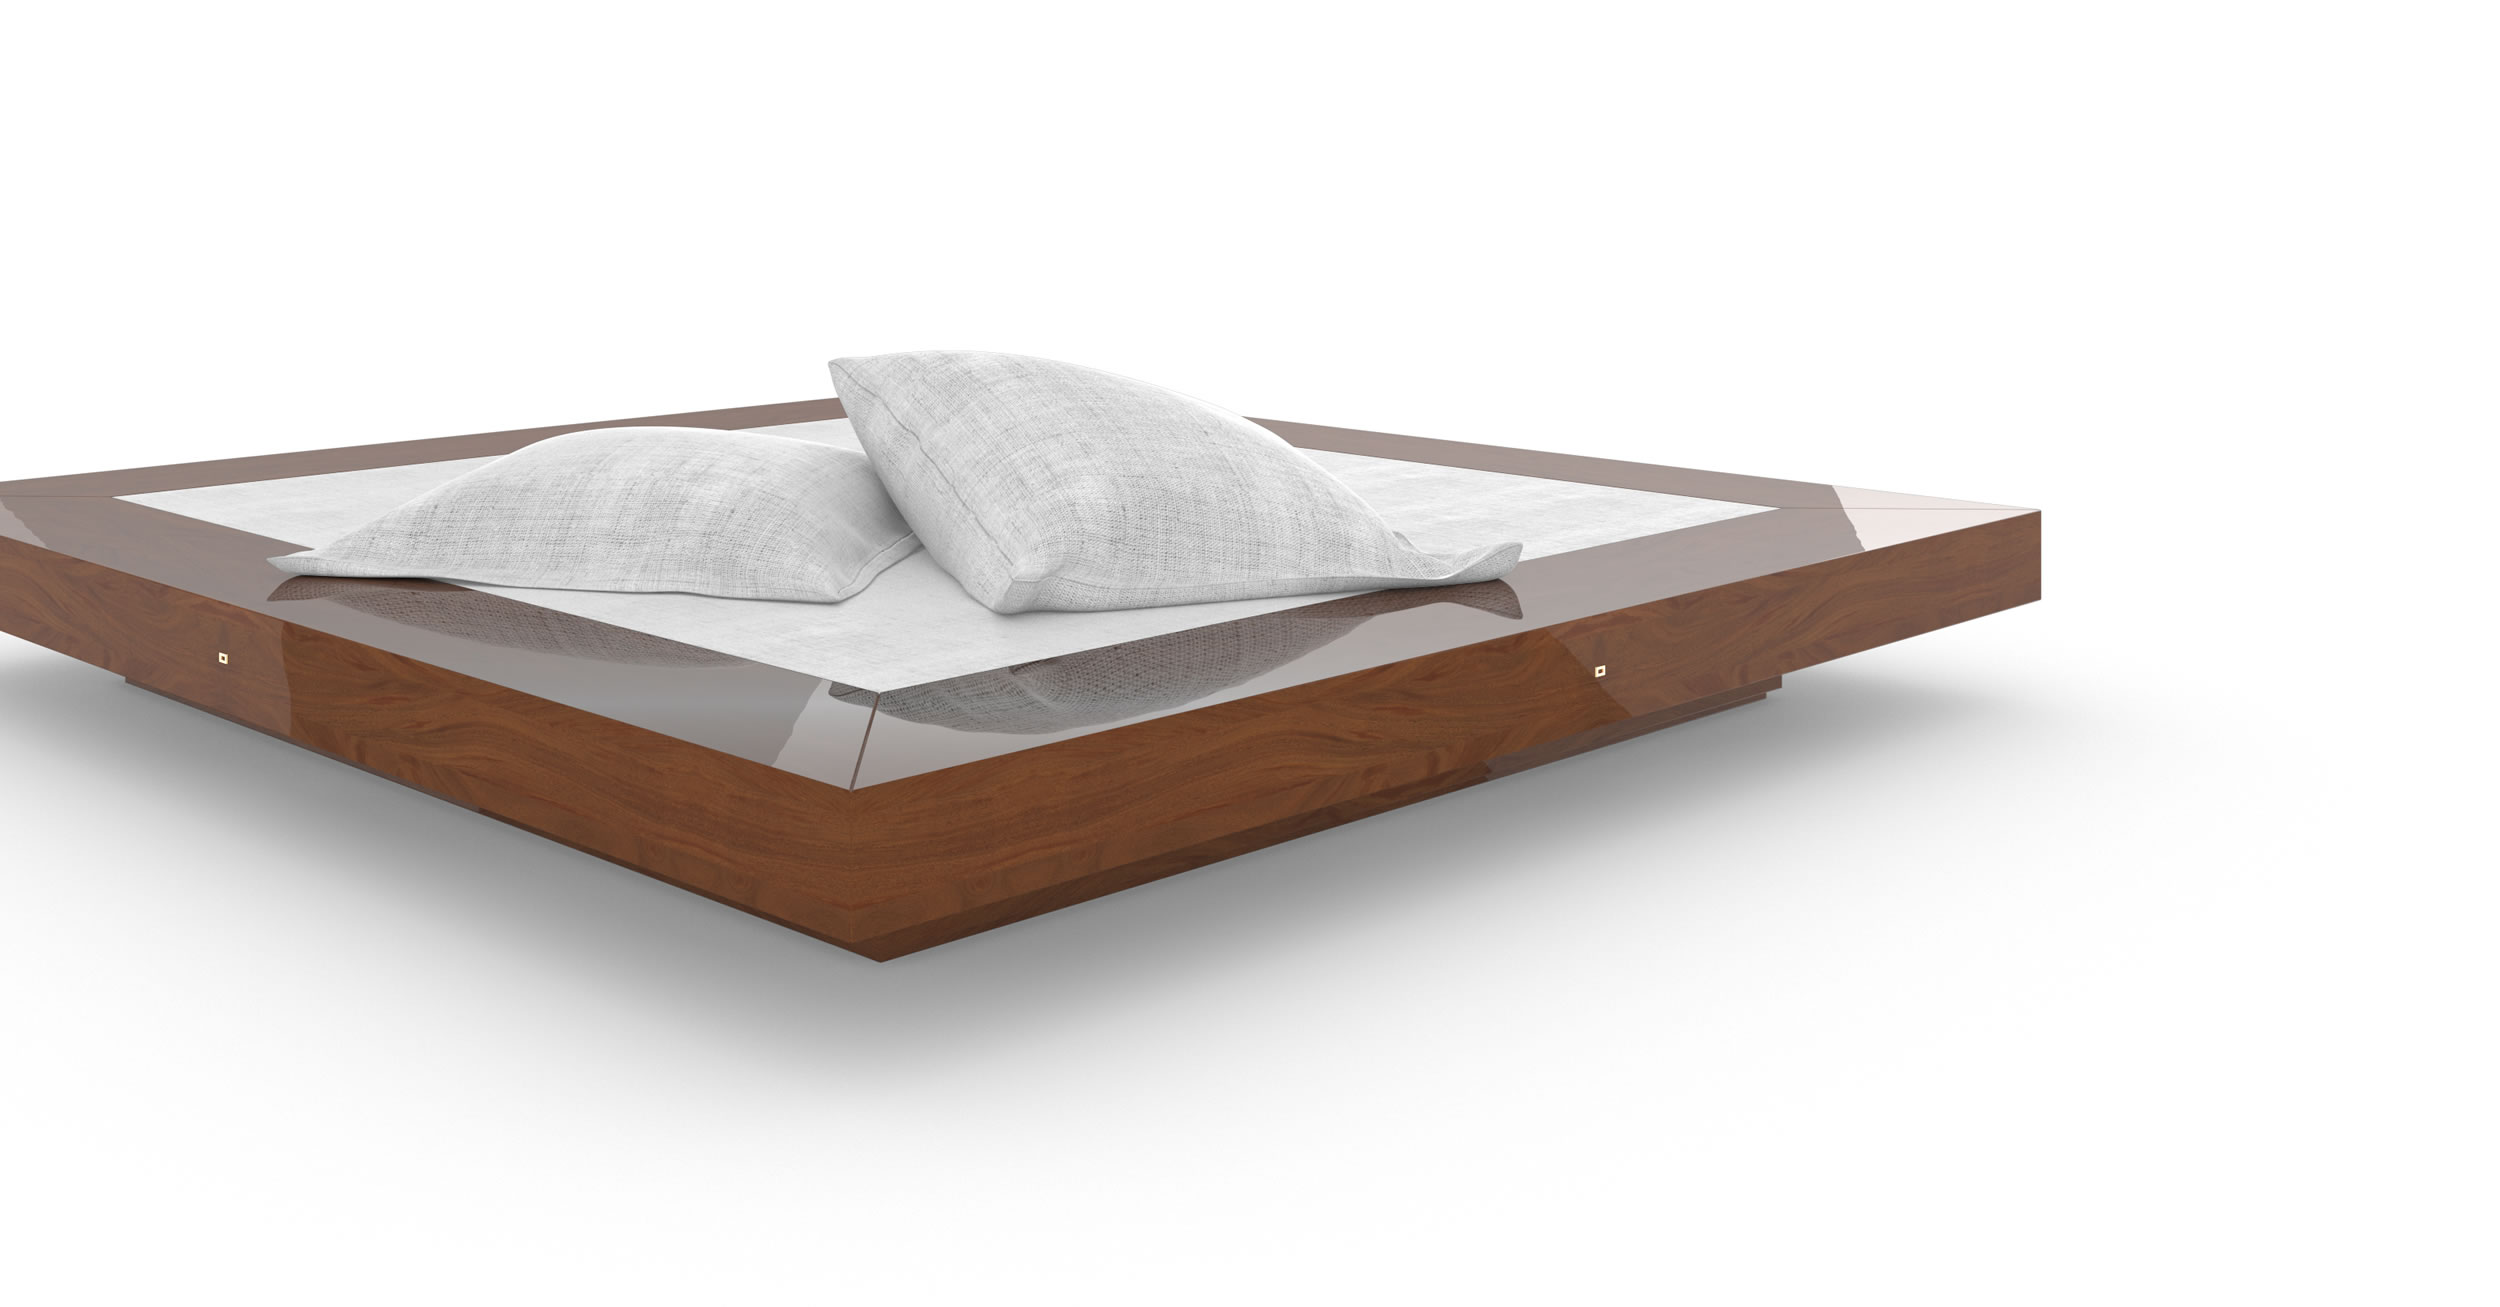 Design Bed Select Mahogany Hardwood Purist Handcrafted Design Refined InteriorFELIX SCHWAKE